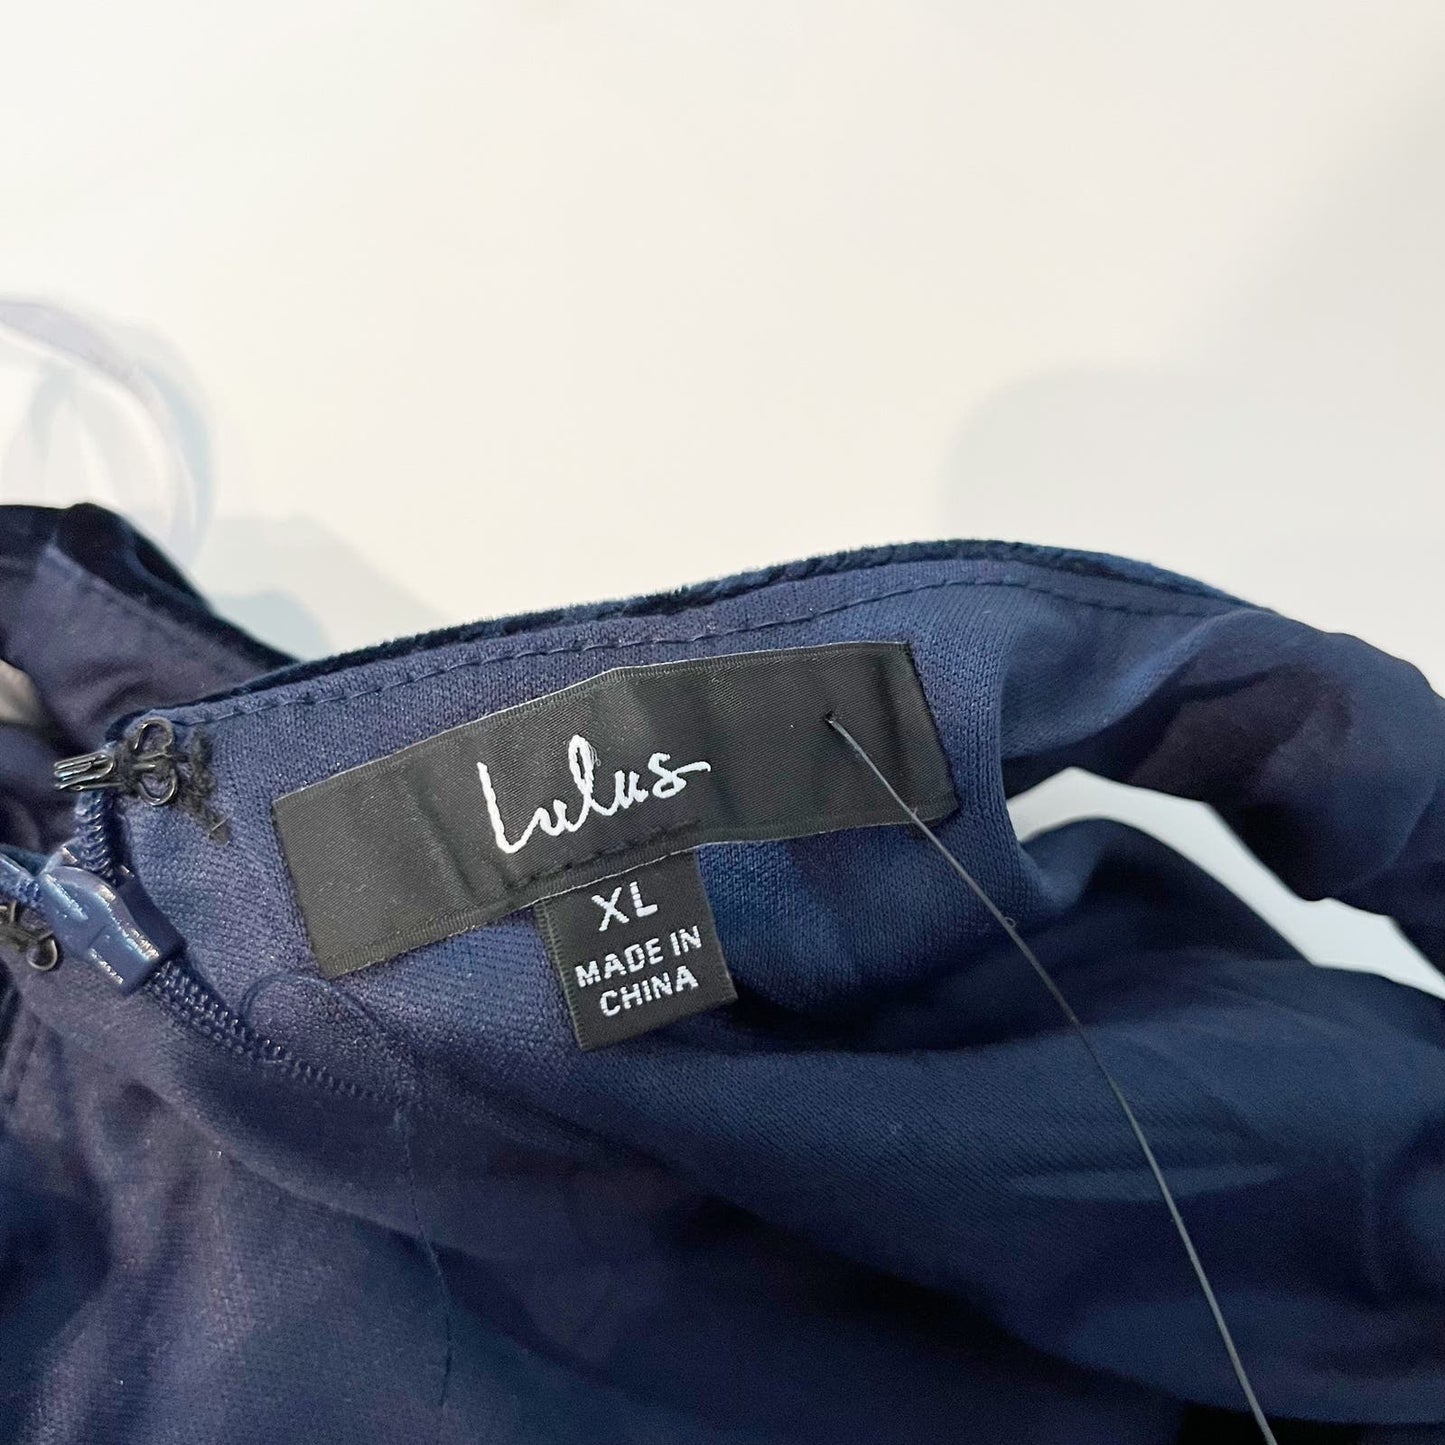 Lulus Stunning Luxury Velvet Sleeveless V Neck Maxi Dress Navy Blue XL